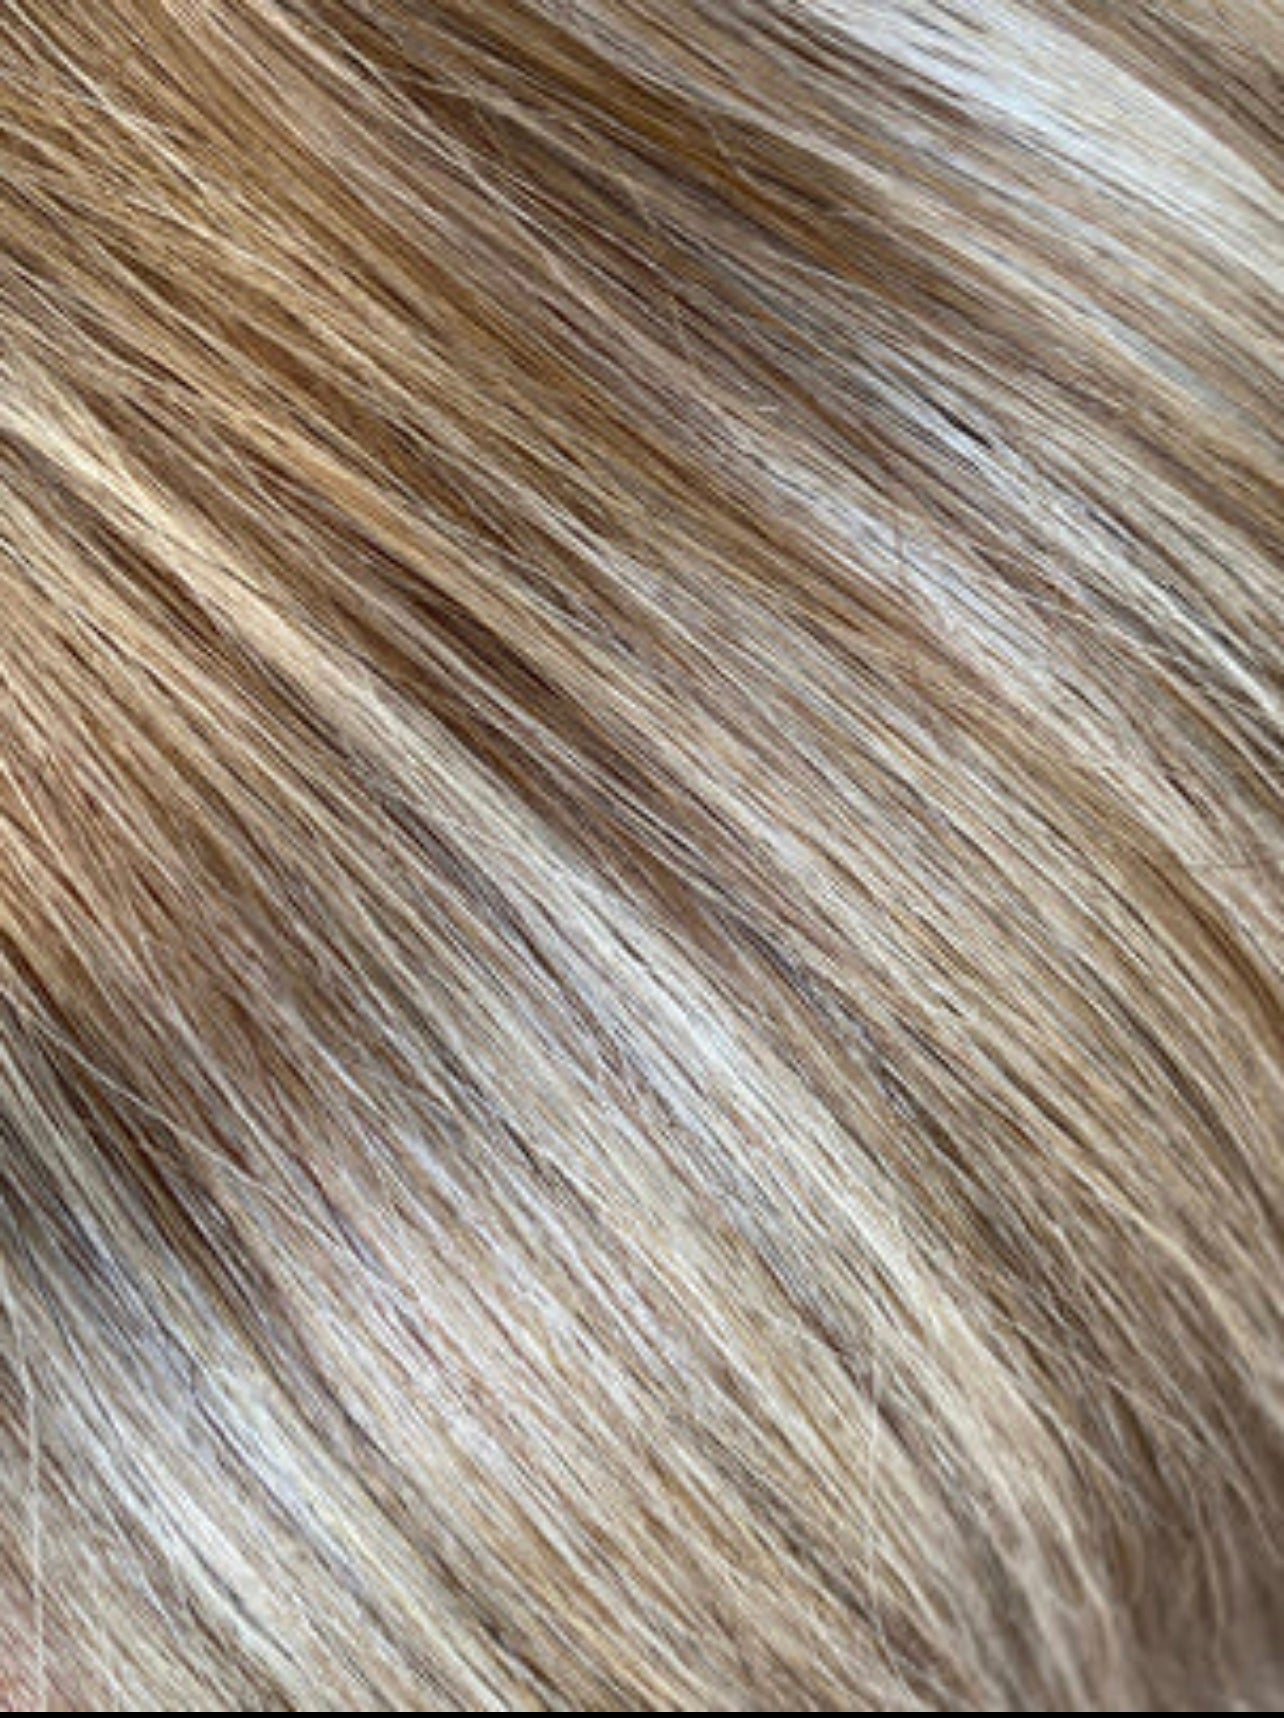 TAPE IN HAIR EXTENSIONS 6-60 - Light Brown & Clean Blonde (50/50)